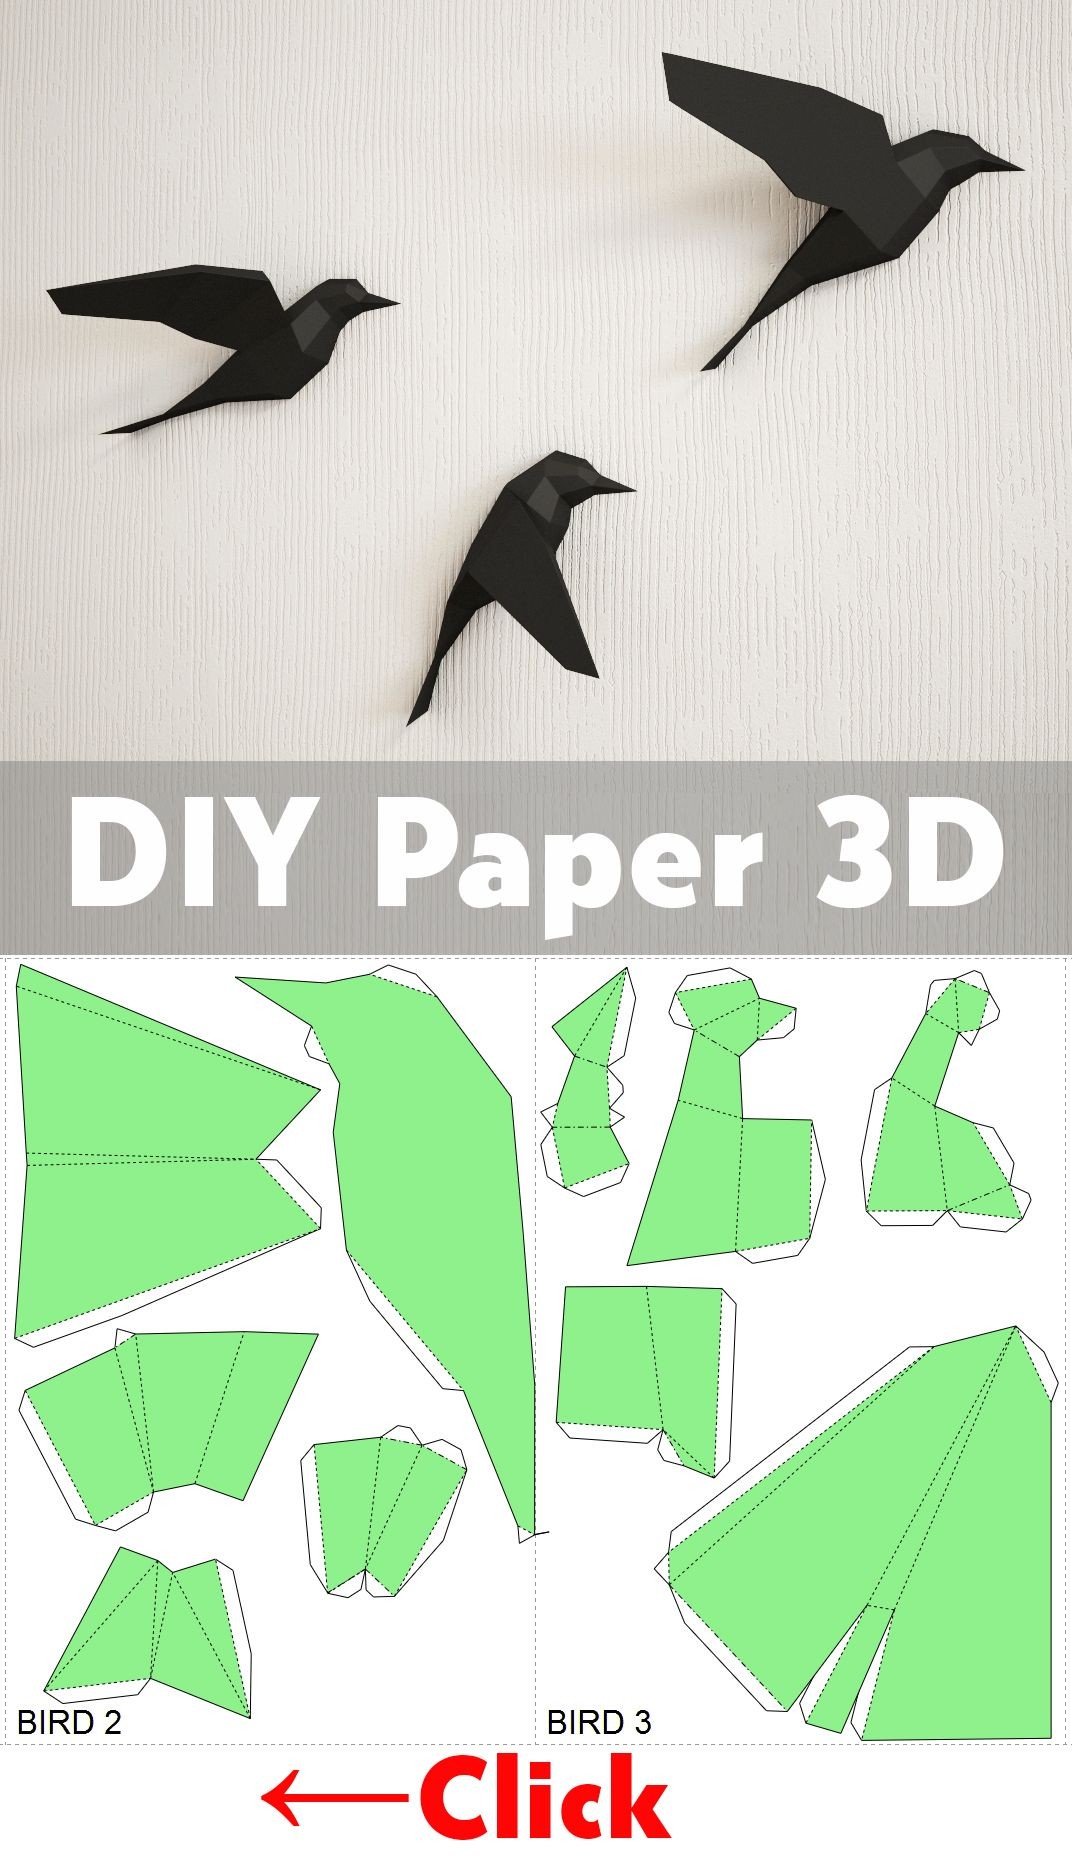 Papercraft Kits Diy Paper Birds On Wall 3d Papercraft Easy Paper Model Sculpture